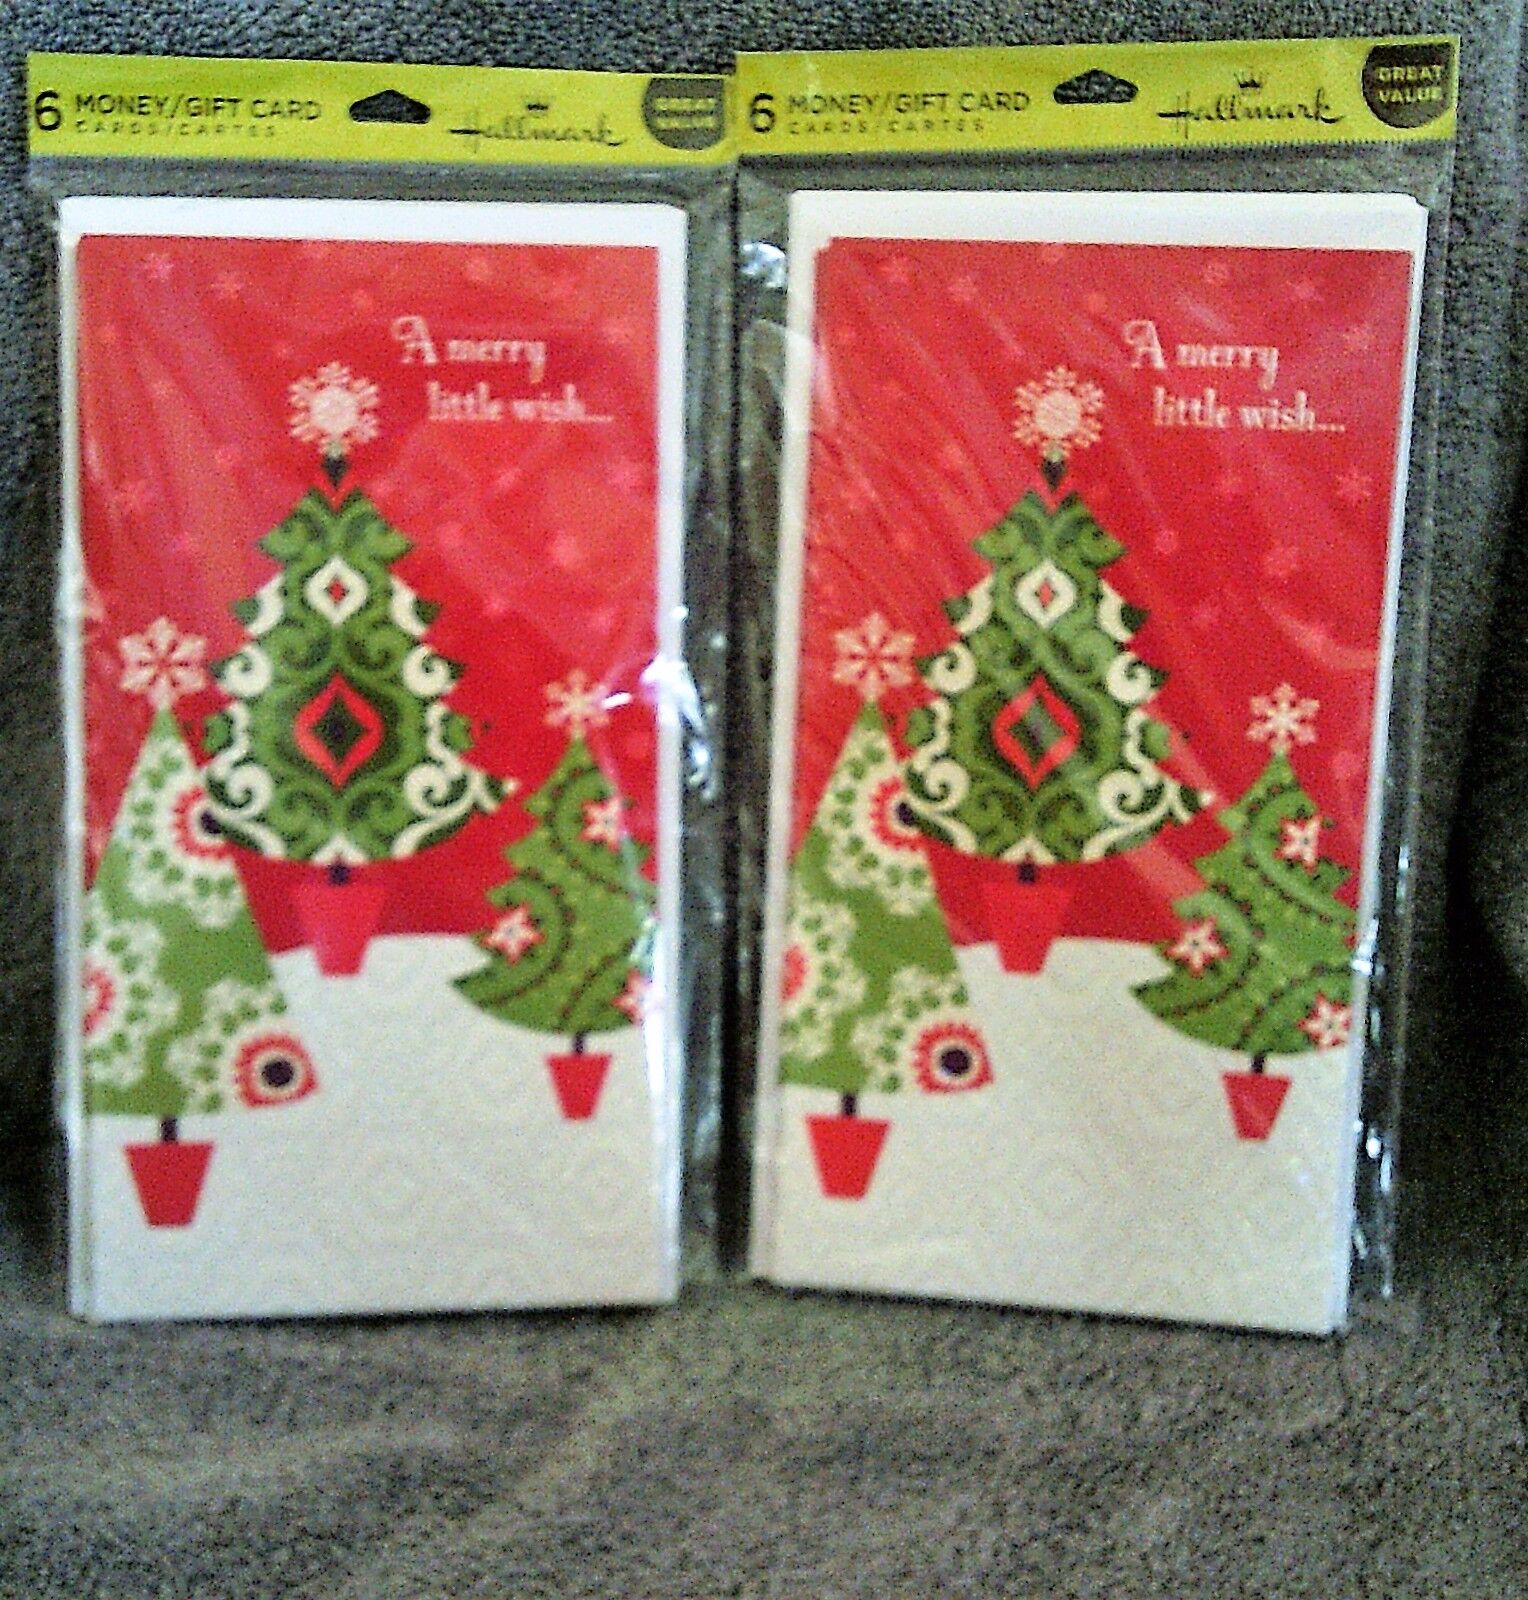 Hallmark Christmas merry little wish 12 money/gift card cards & envelopes - New